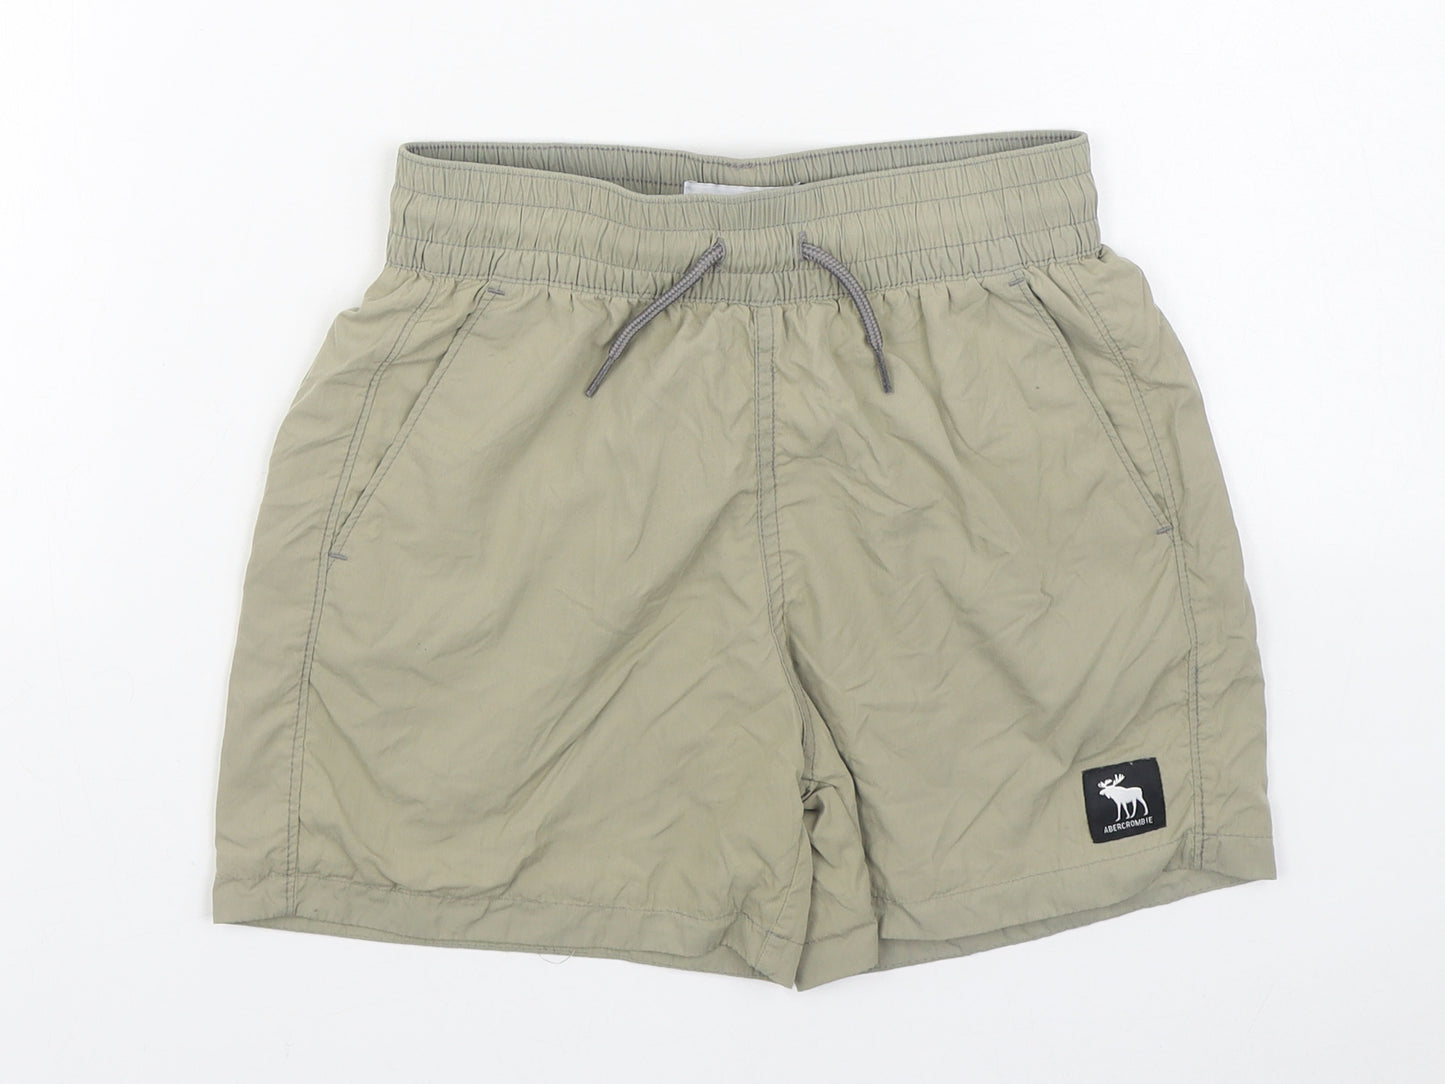 abercrombie kids Boys Beige  Nylon Cargo Shorts Size 9-10 Years  Regular Tie